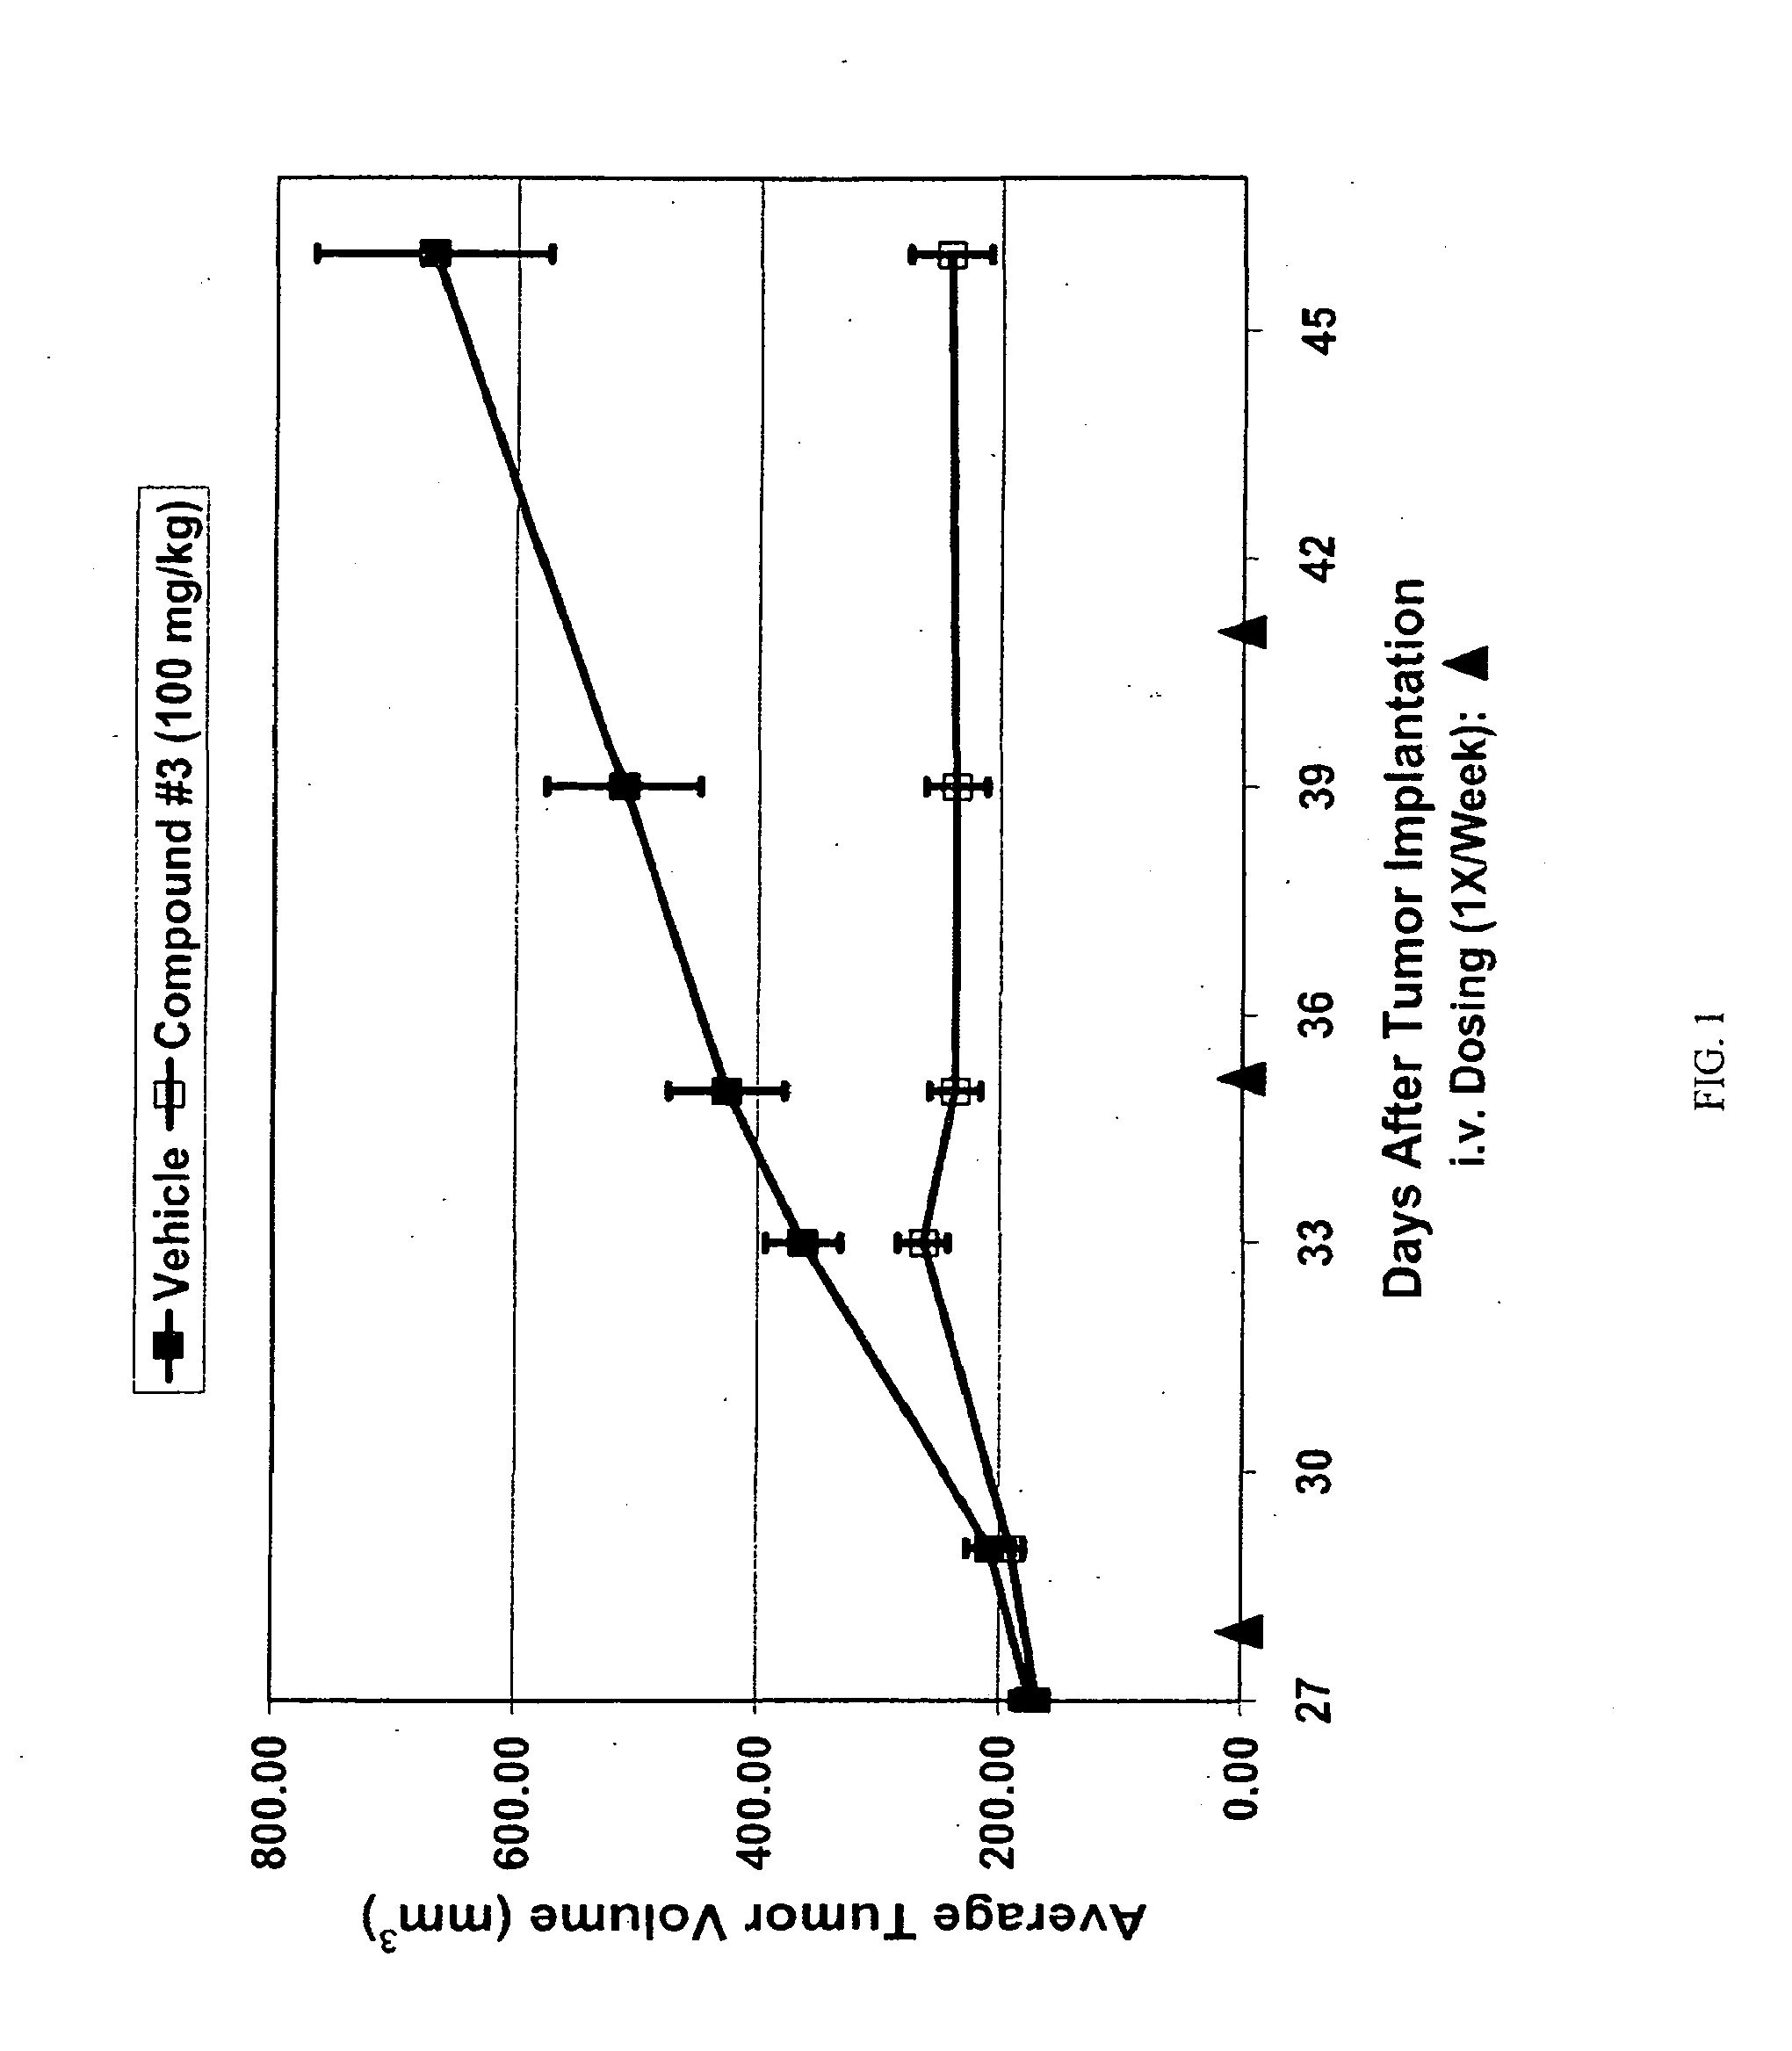 Triazole compounds that modulate hsp90 activity